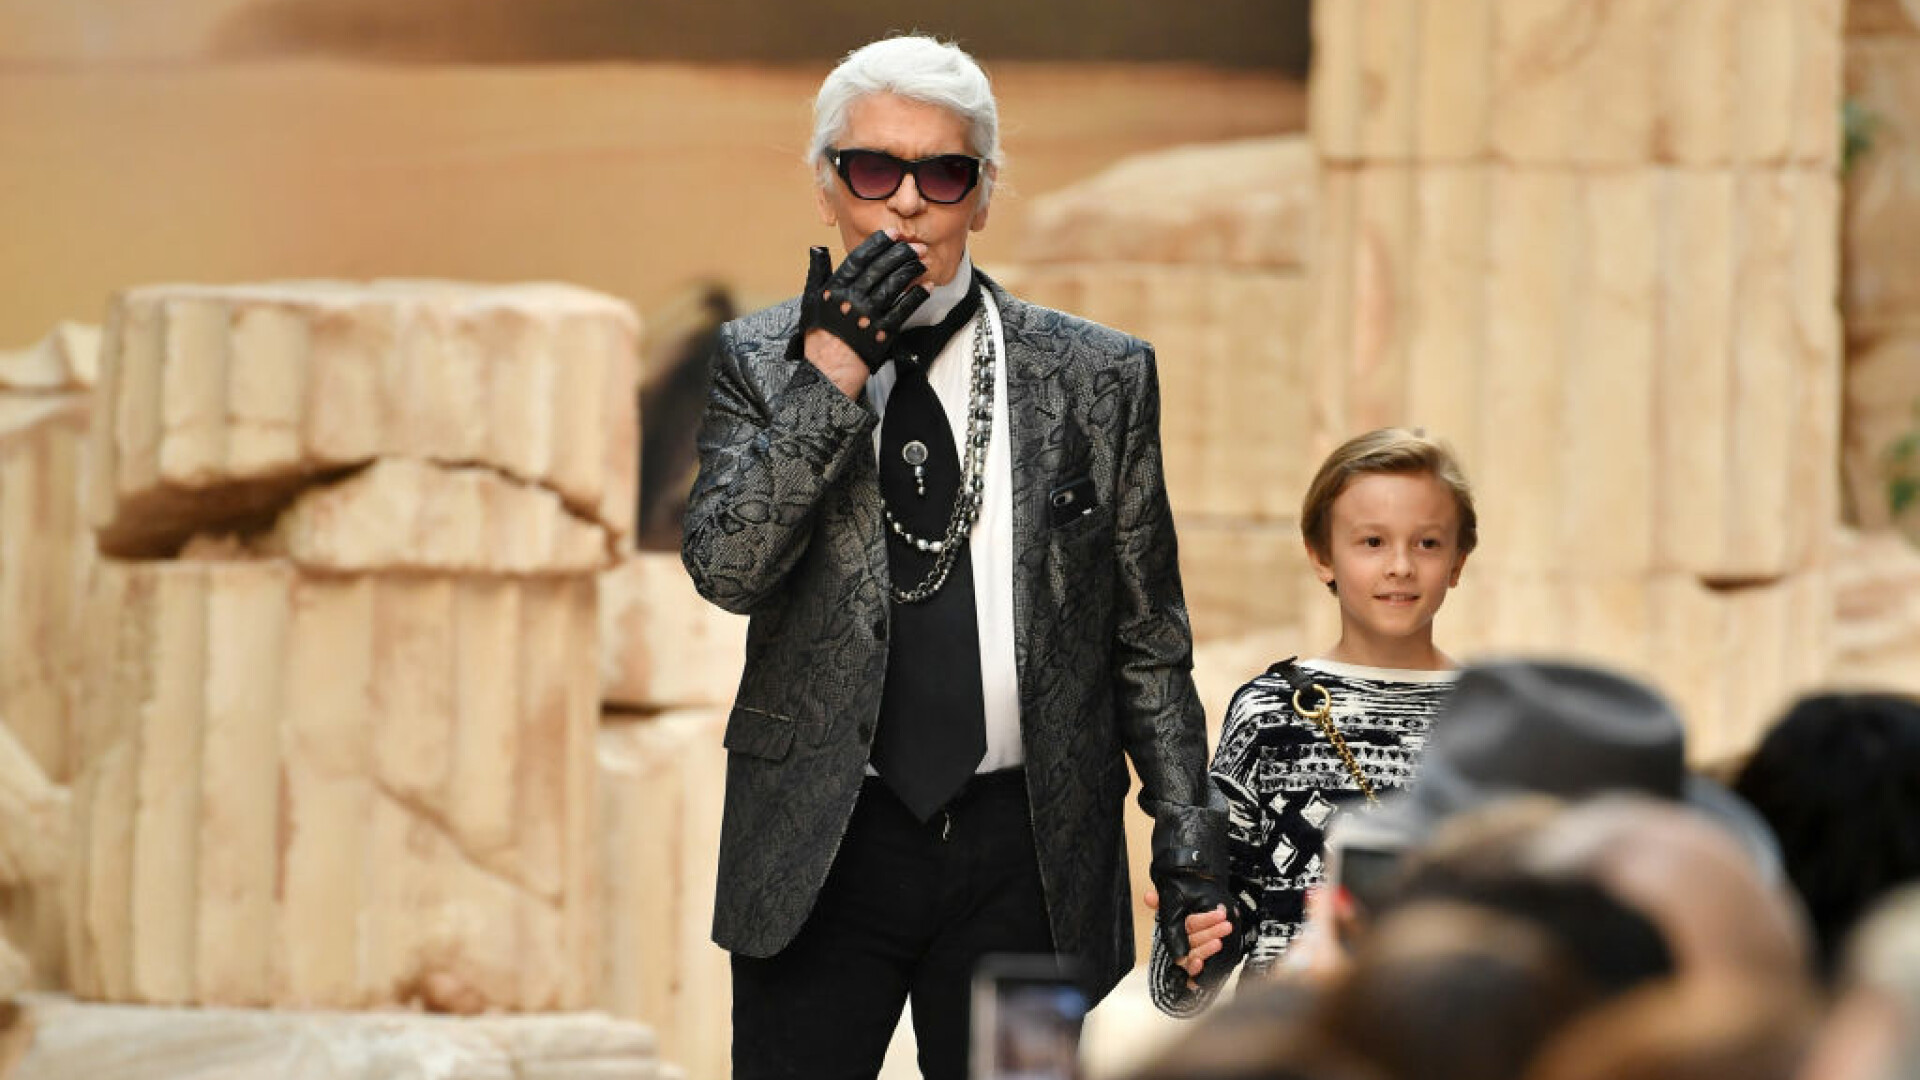 Karl Lagerfeld, designerul Chanel, a murit la vârsta de 85 de ani